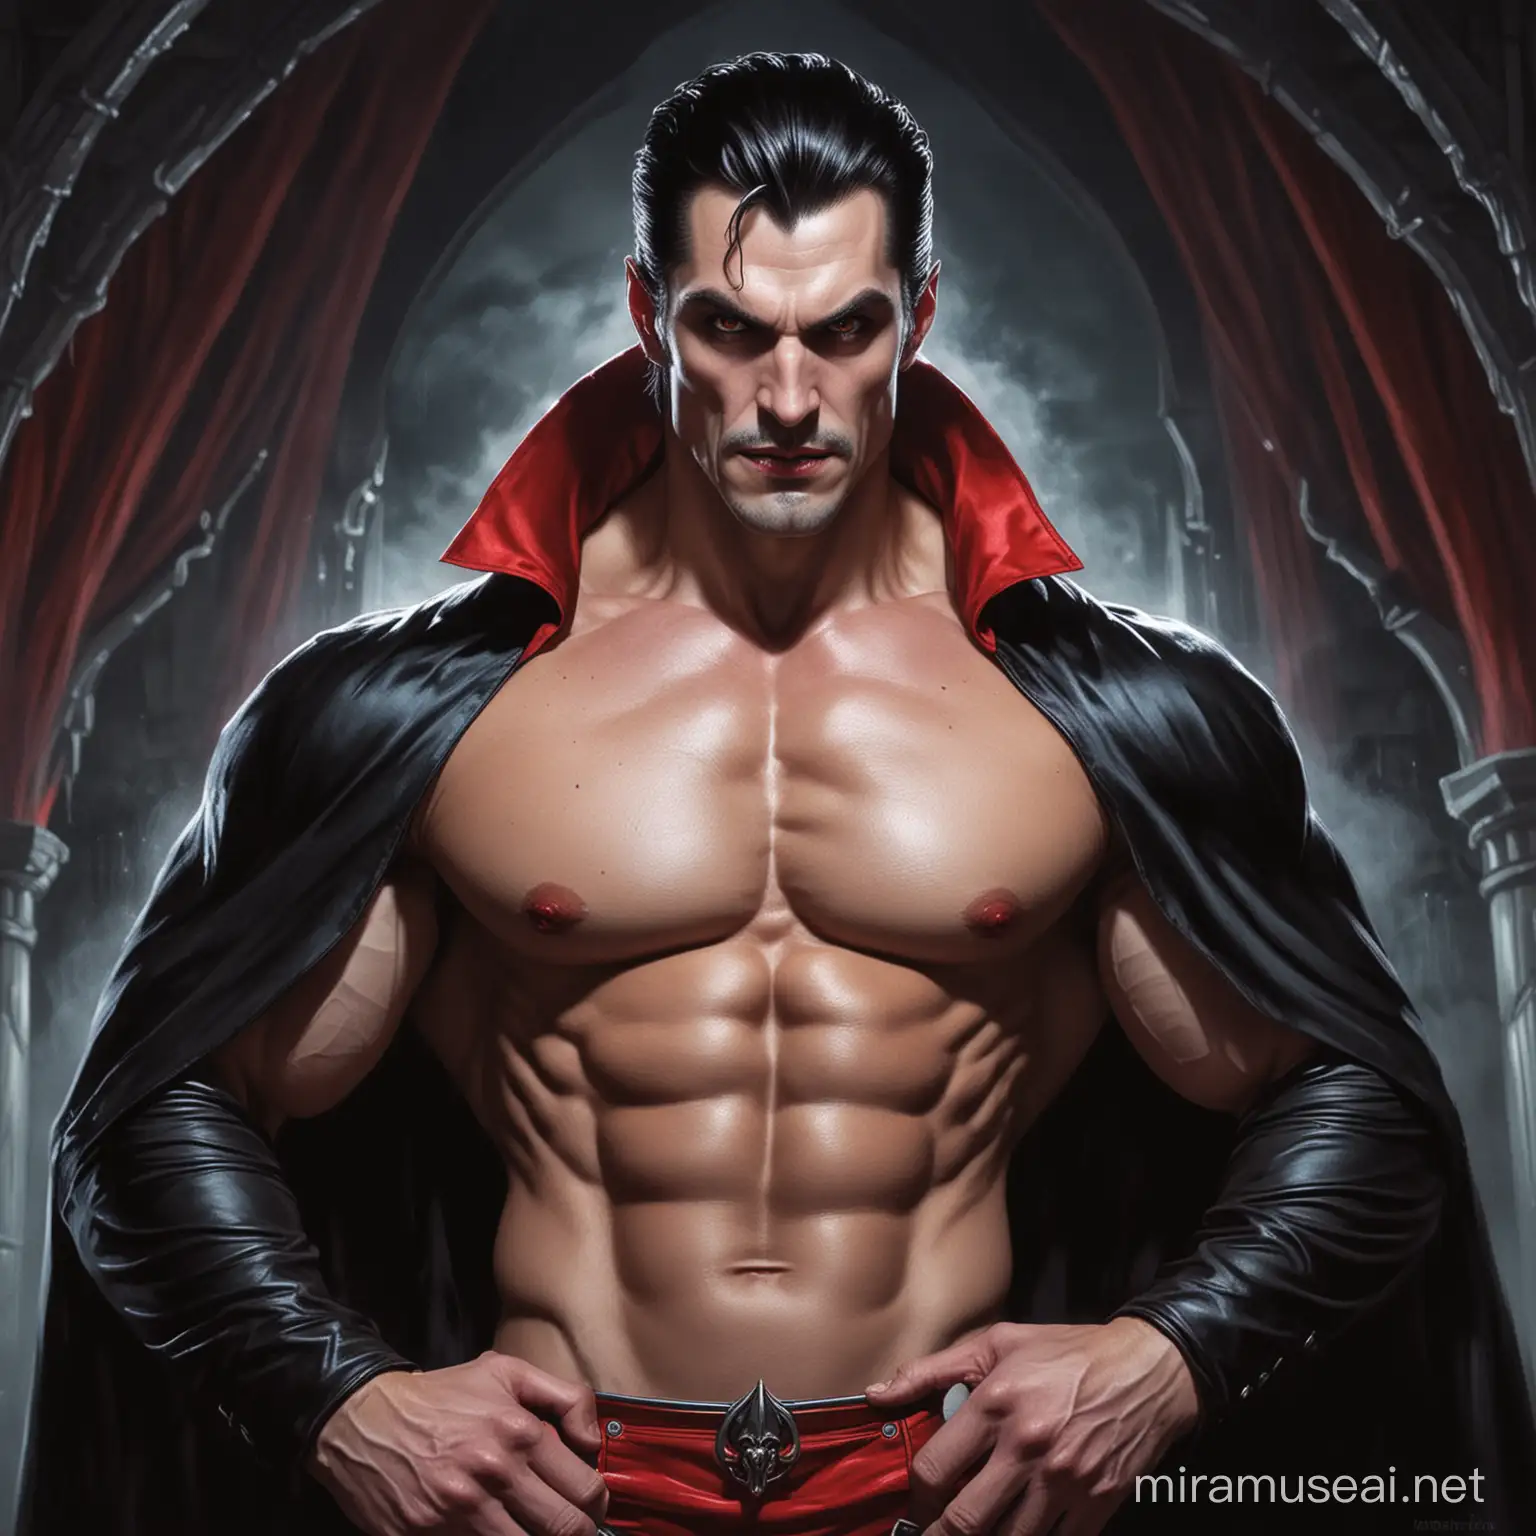 Seductive Dracula Costume Alluring Vampire Attire for Halloween Party